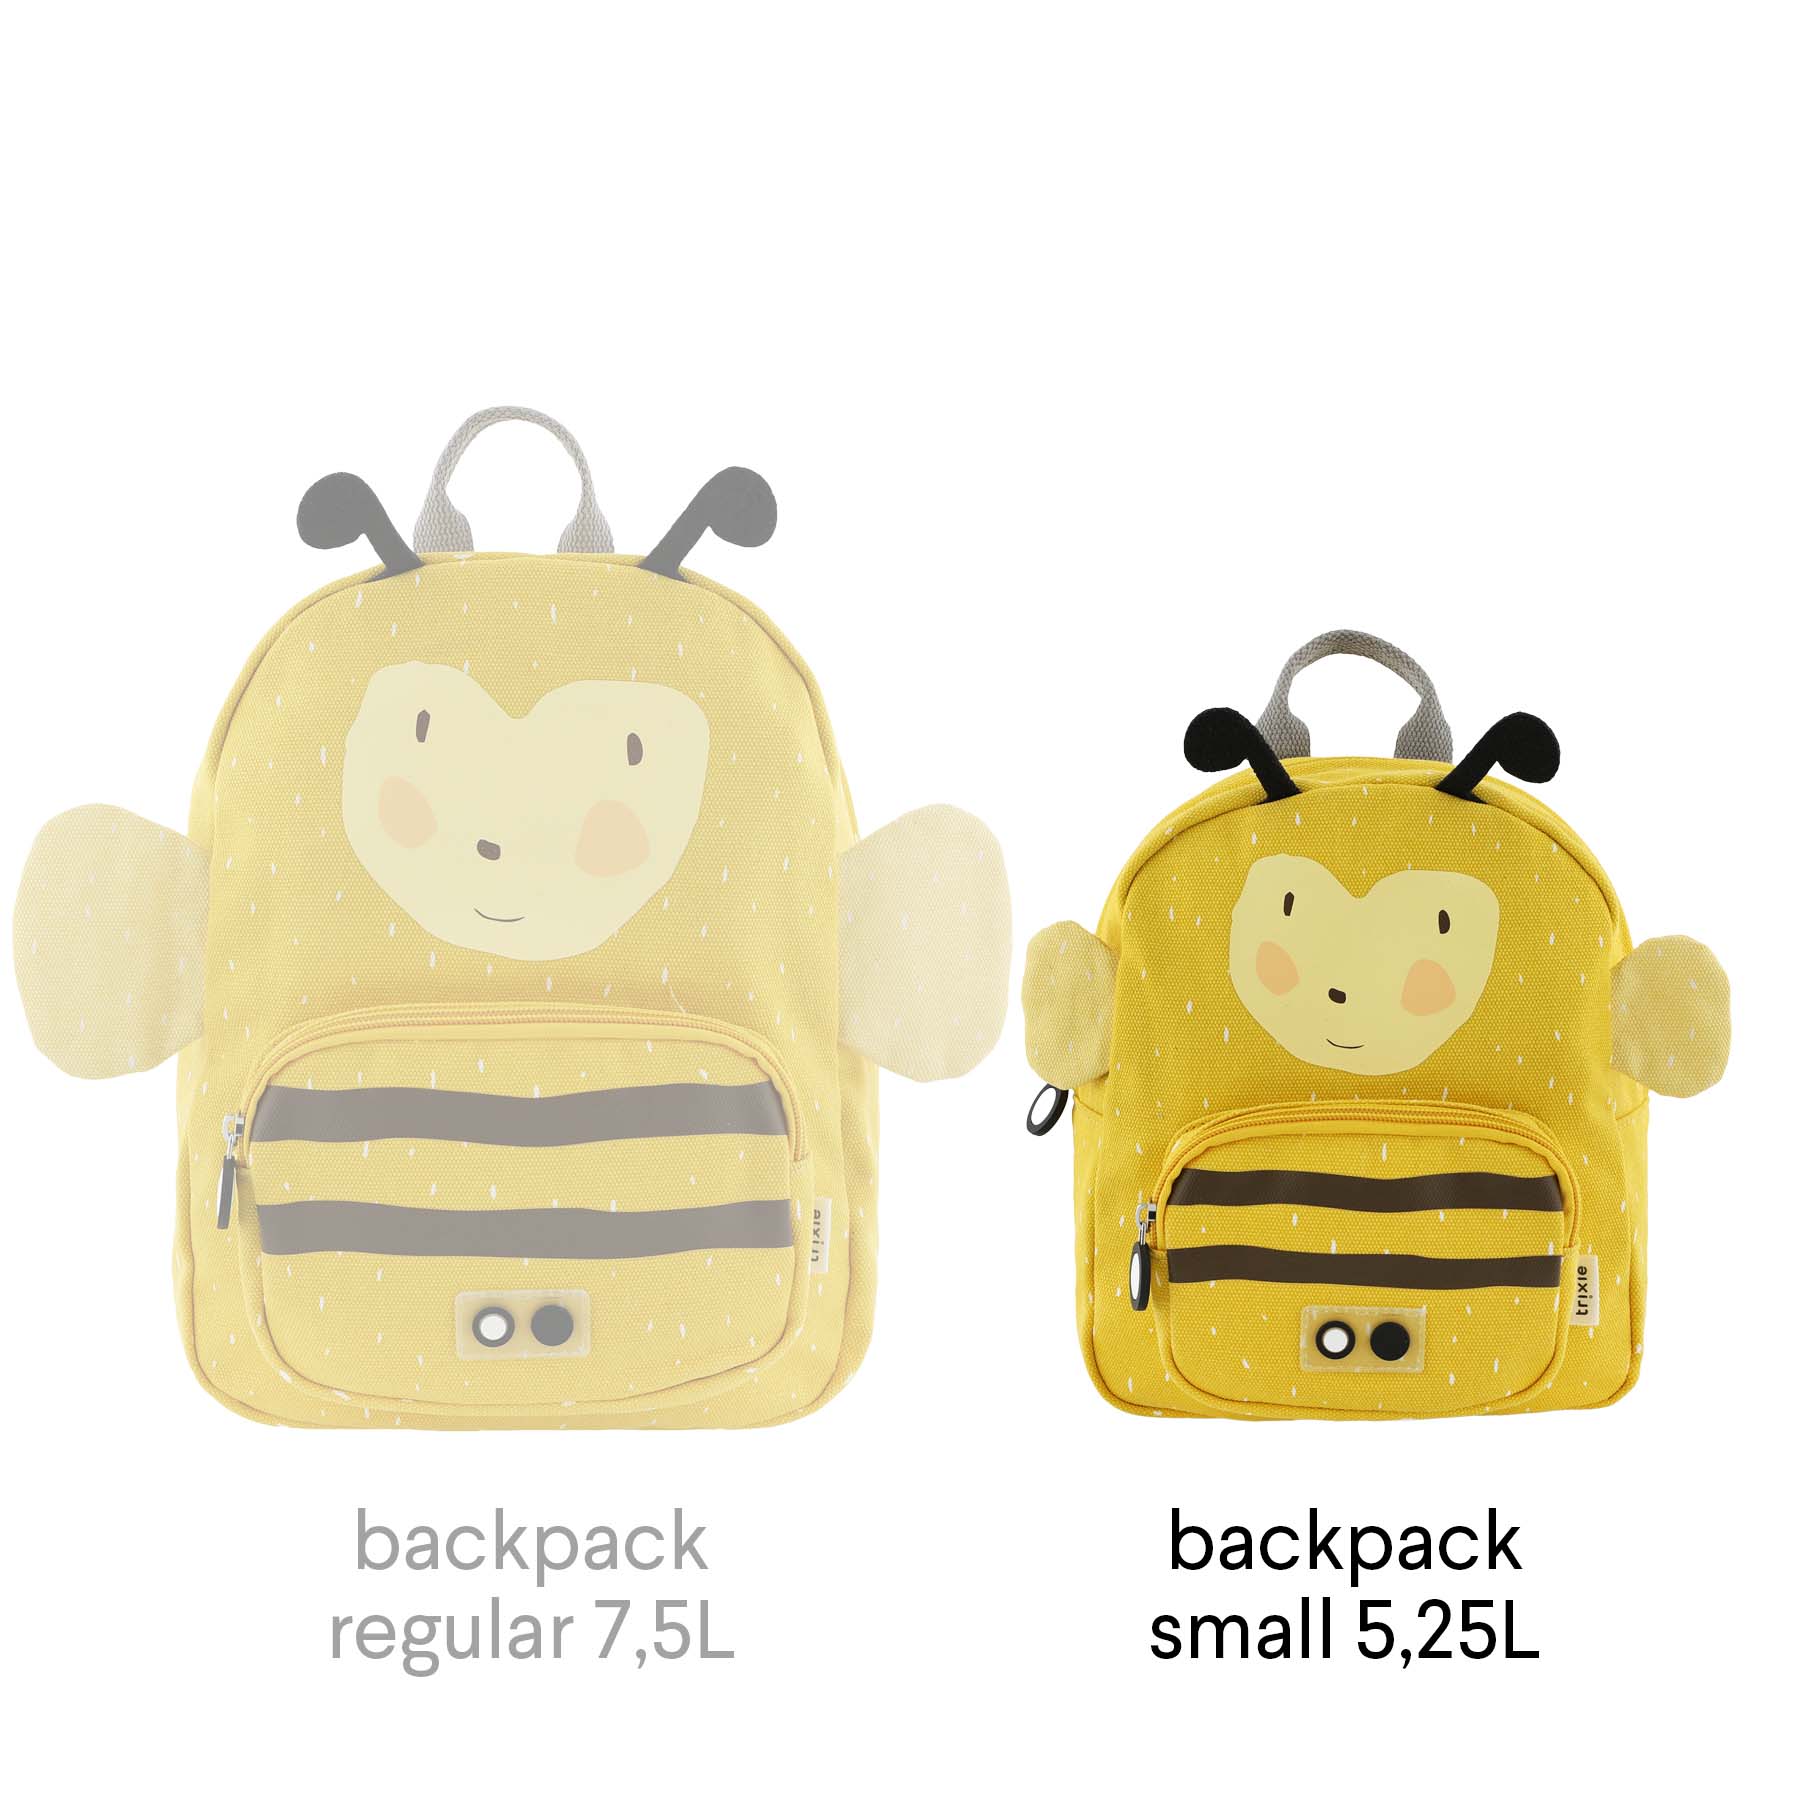 Backpack small - Mrs. Bumblebee